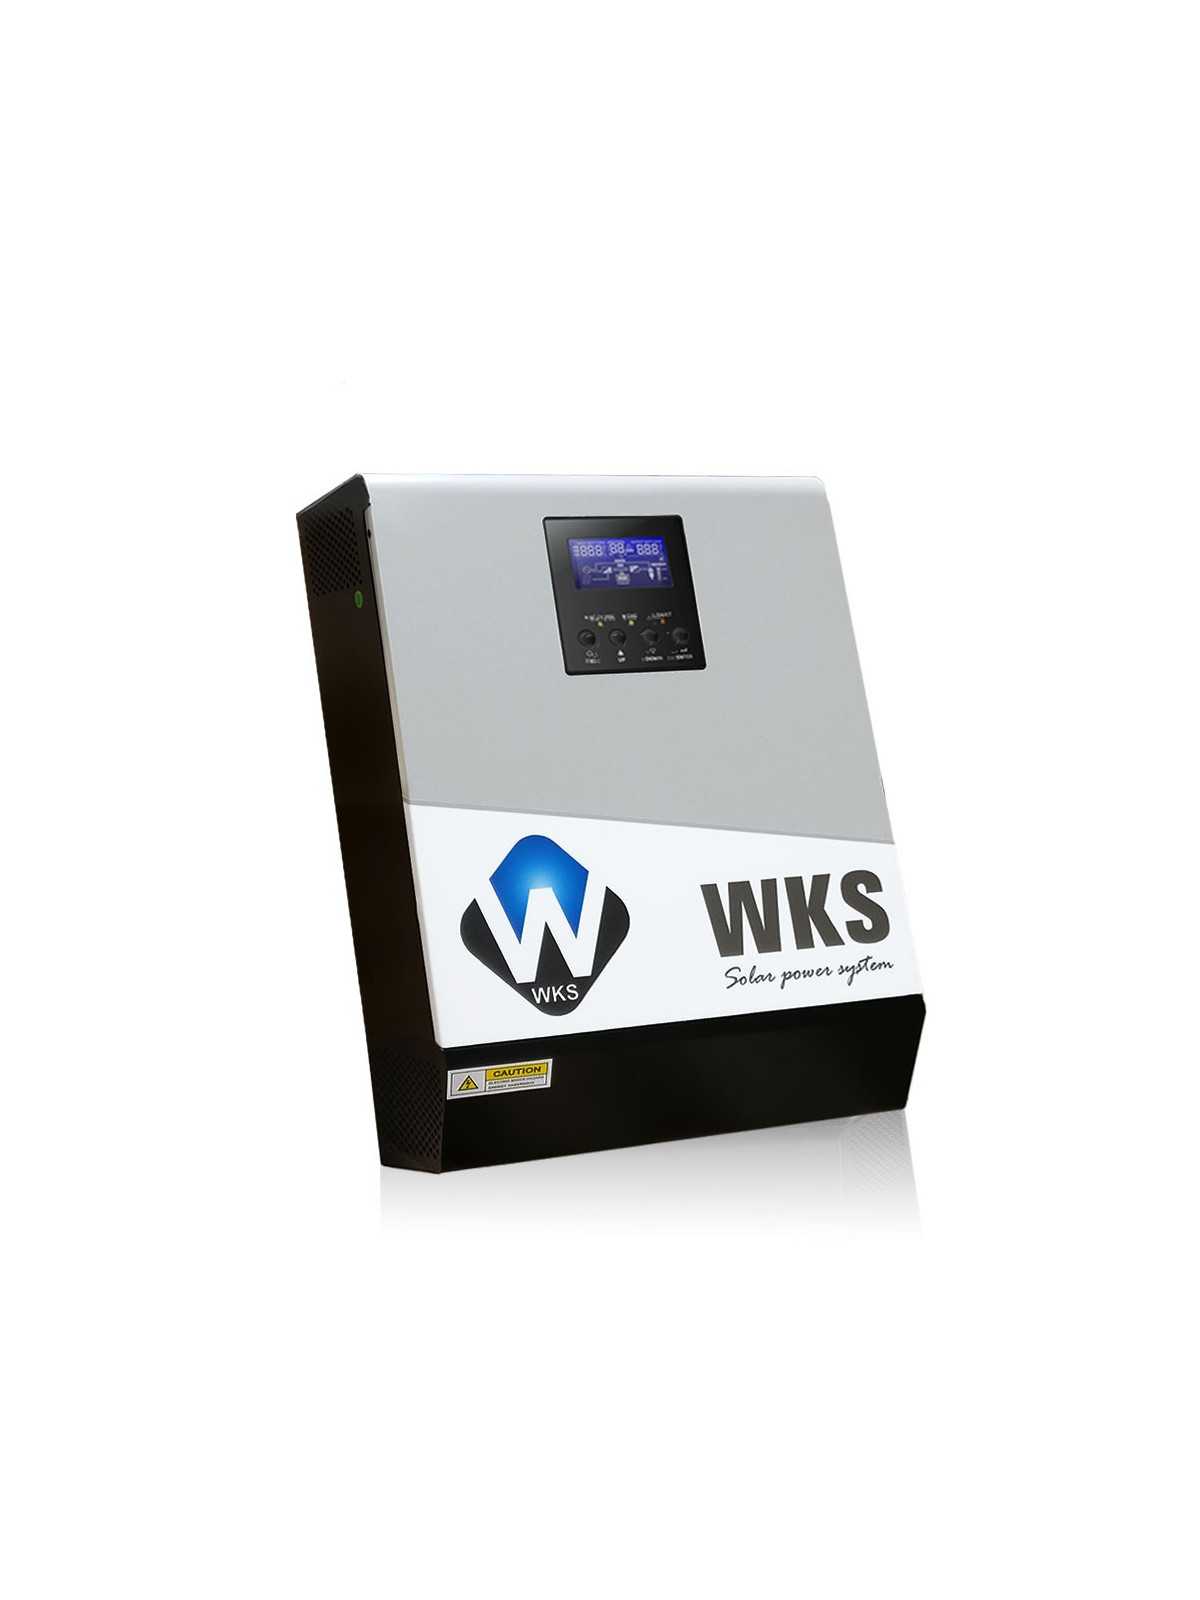 WKS 1 kVA 24V hybride omvormer